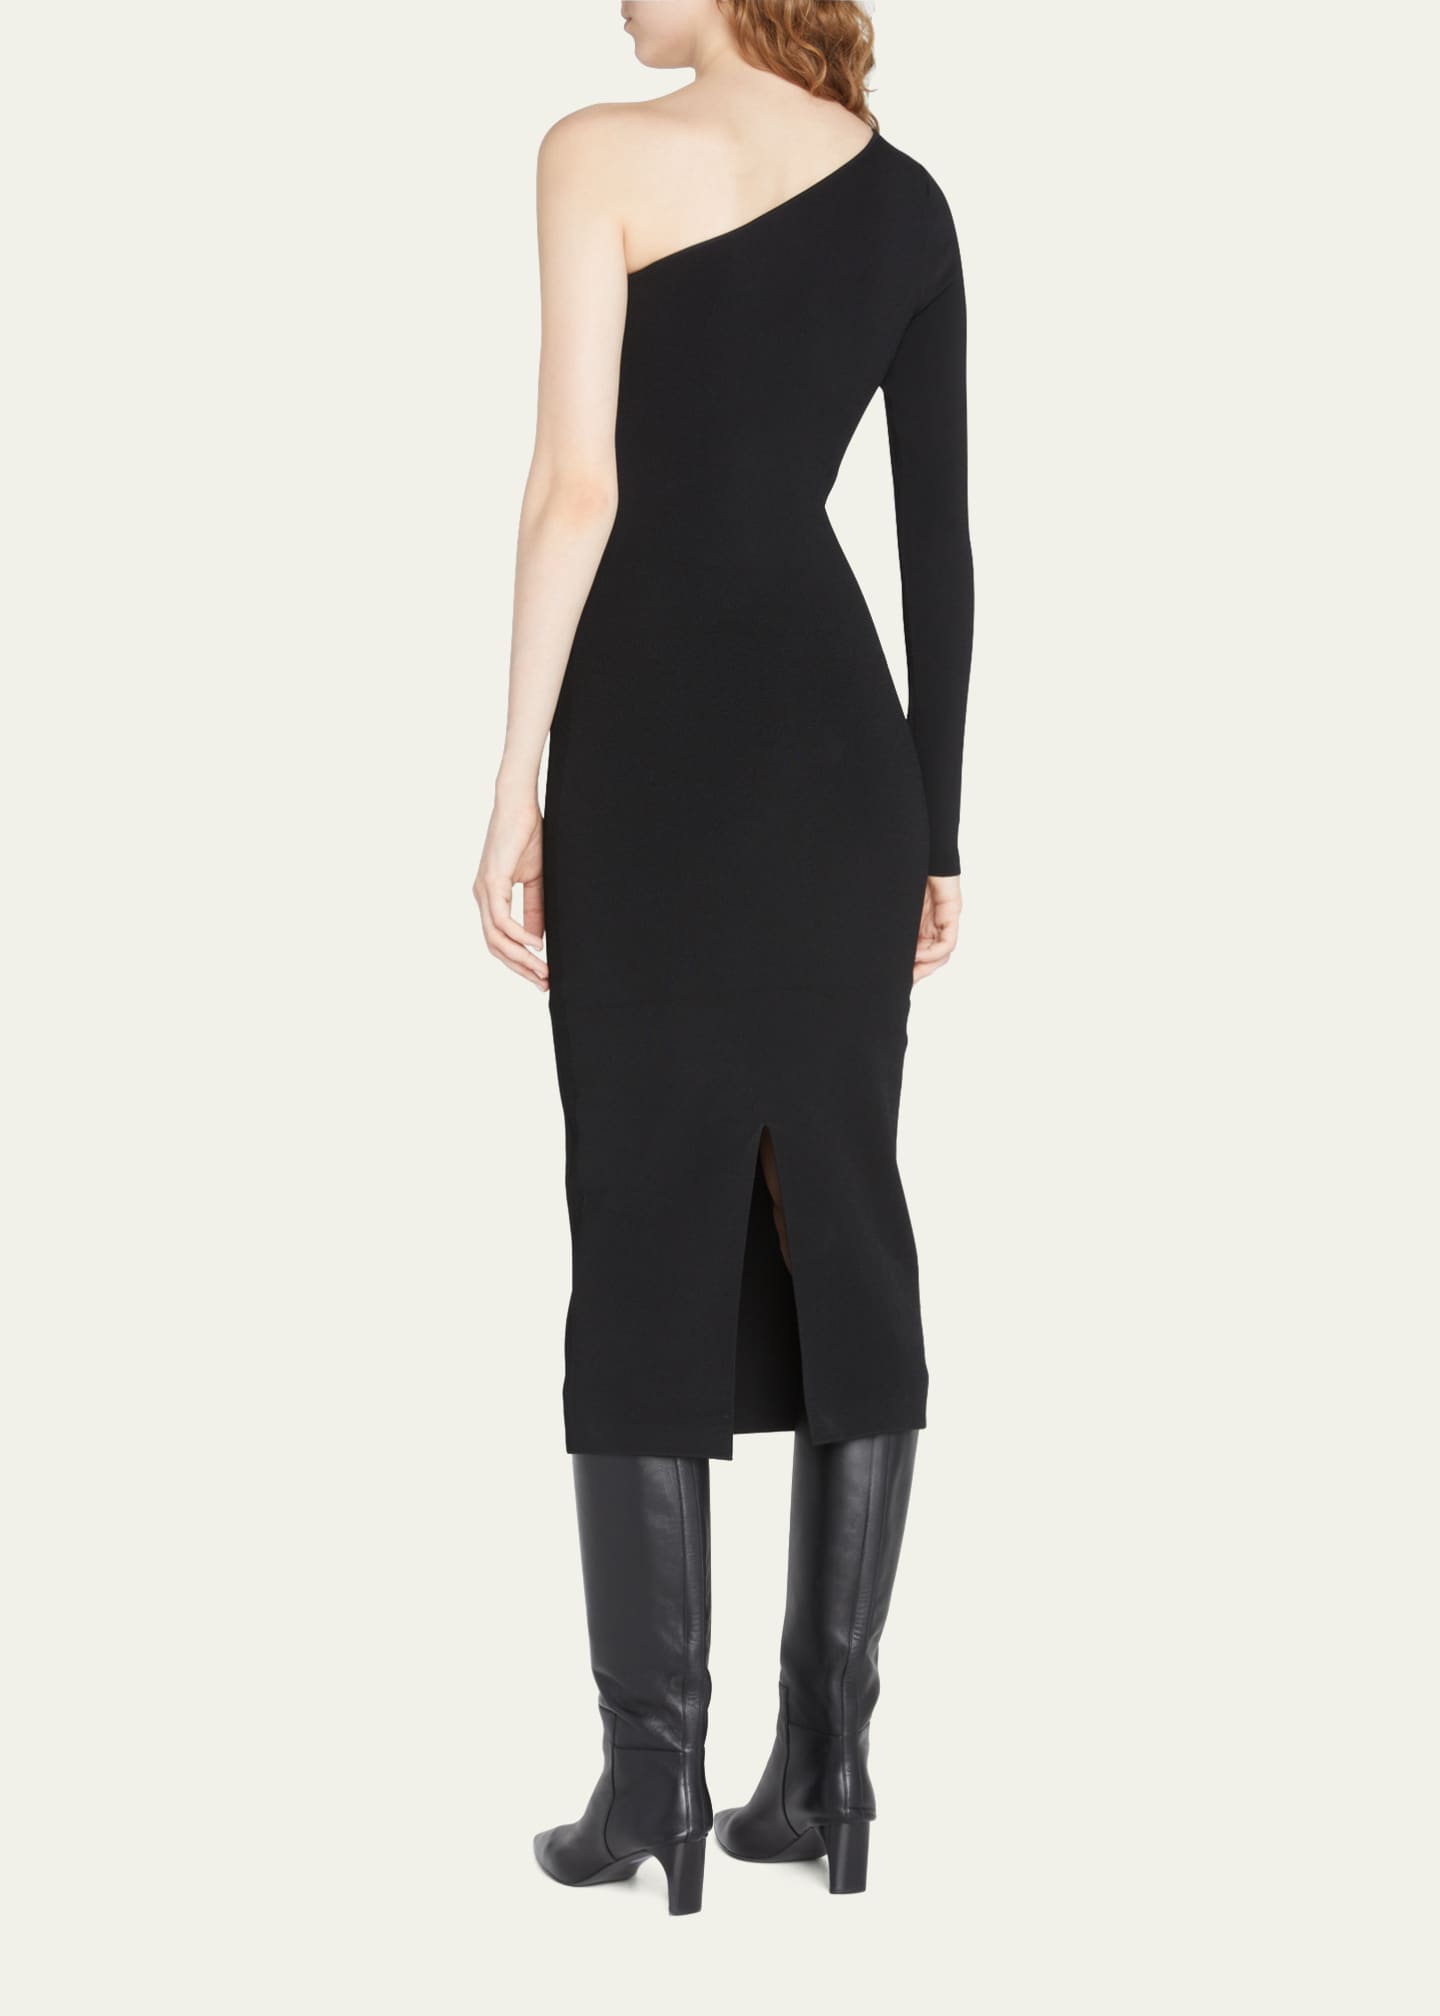 Victoria Beckham VB Body One-Shoulder Midi Dress - Bergdorf Goodman